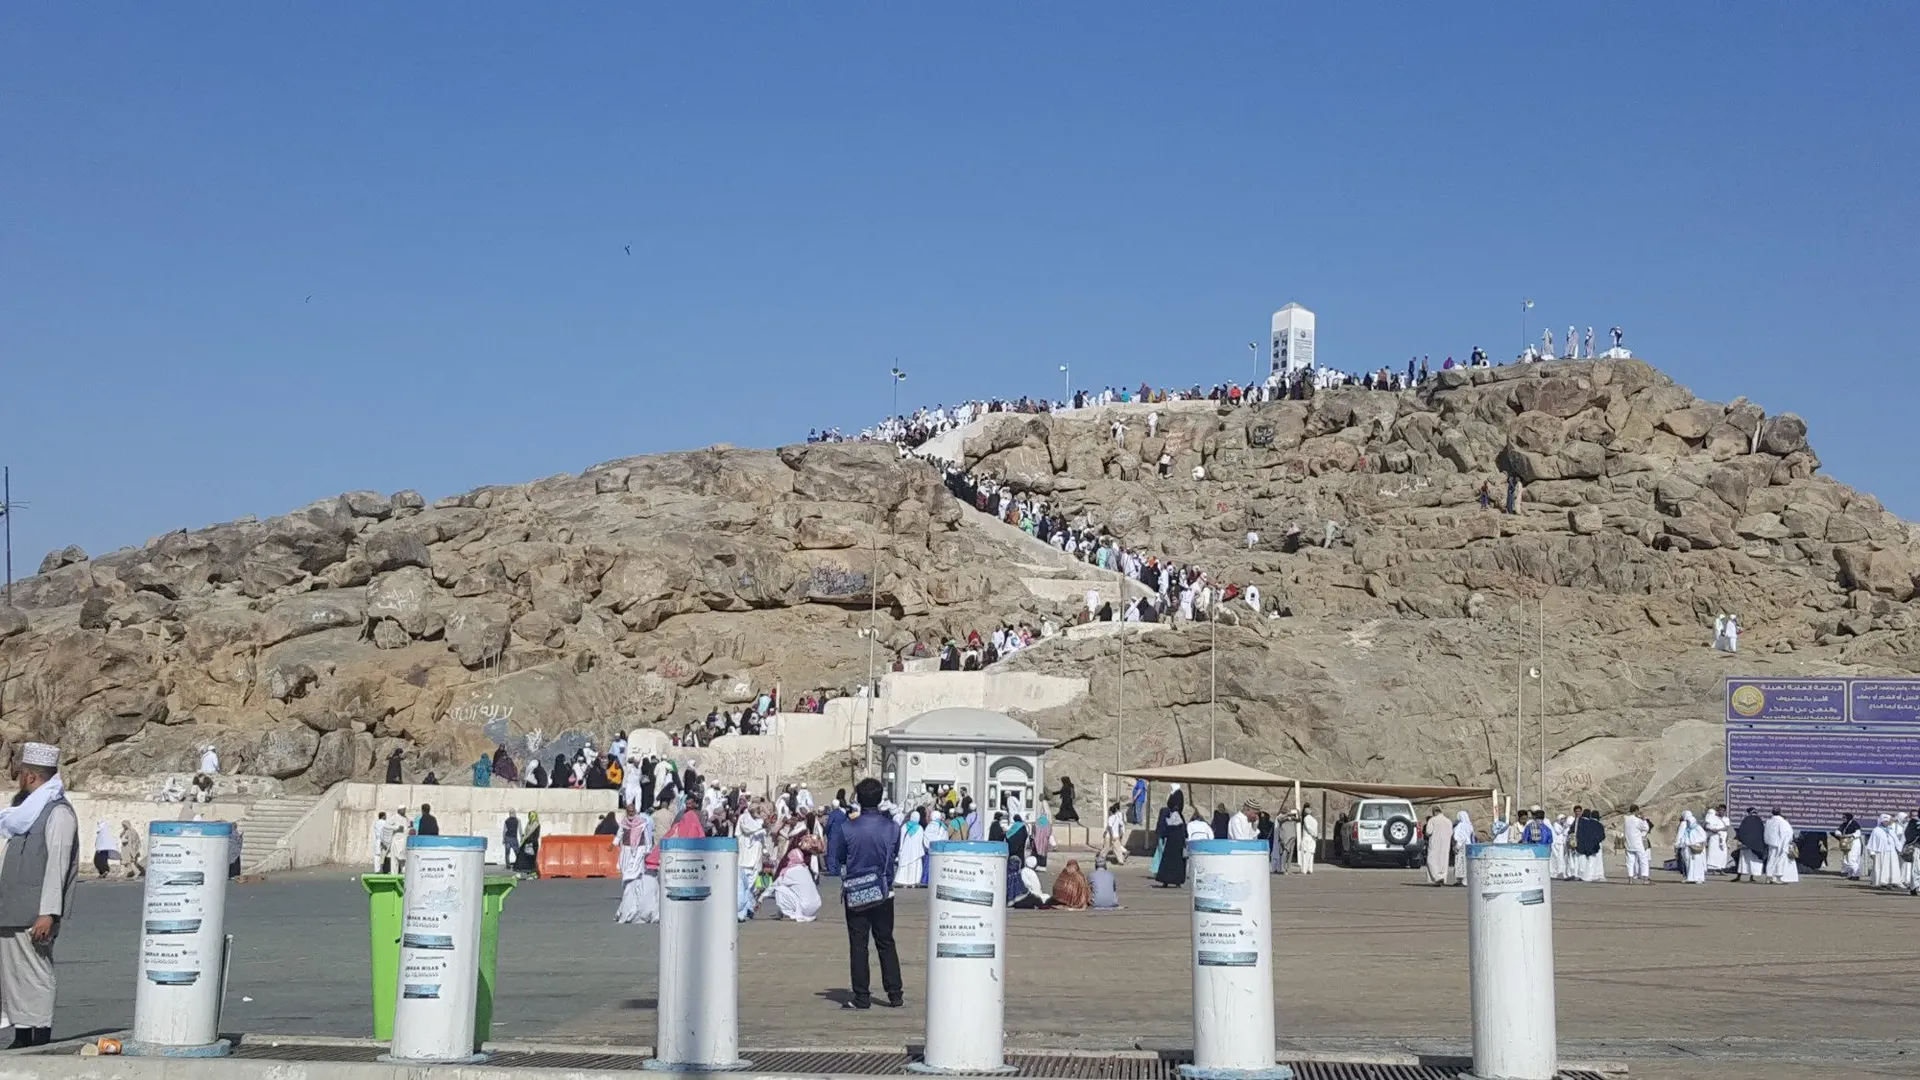 Mount Arafat